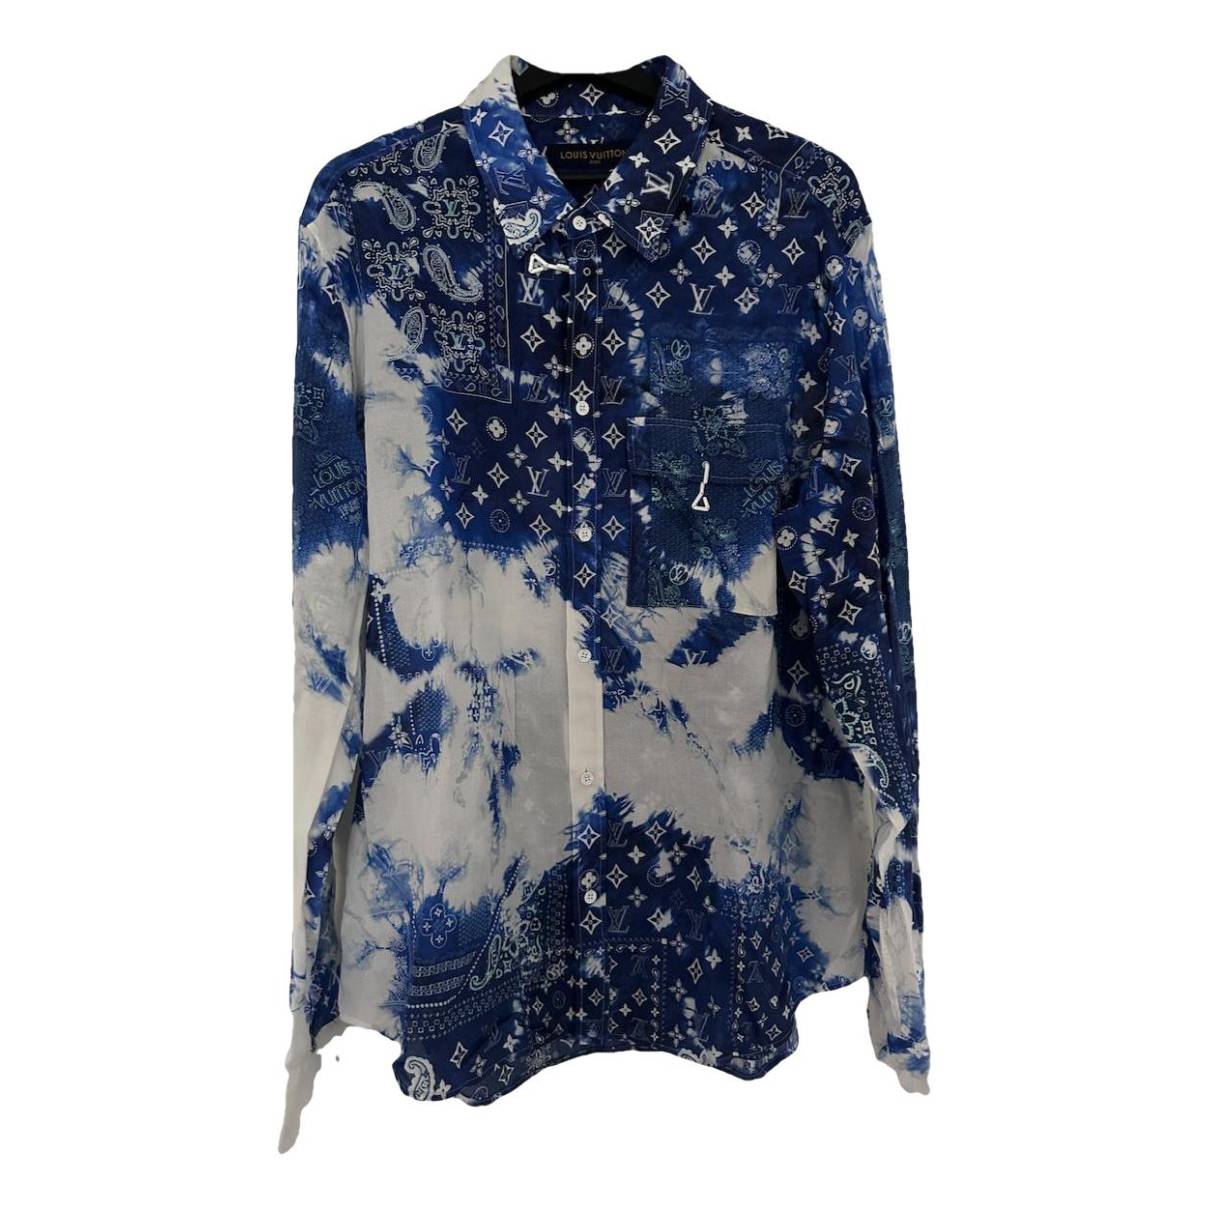 T-shirt Louis Vuitton Blue size XXXL International in Cotton - 26586274